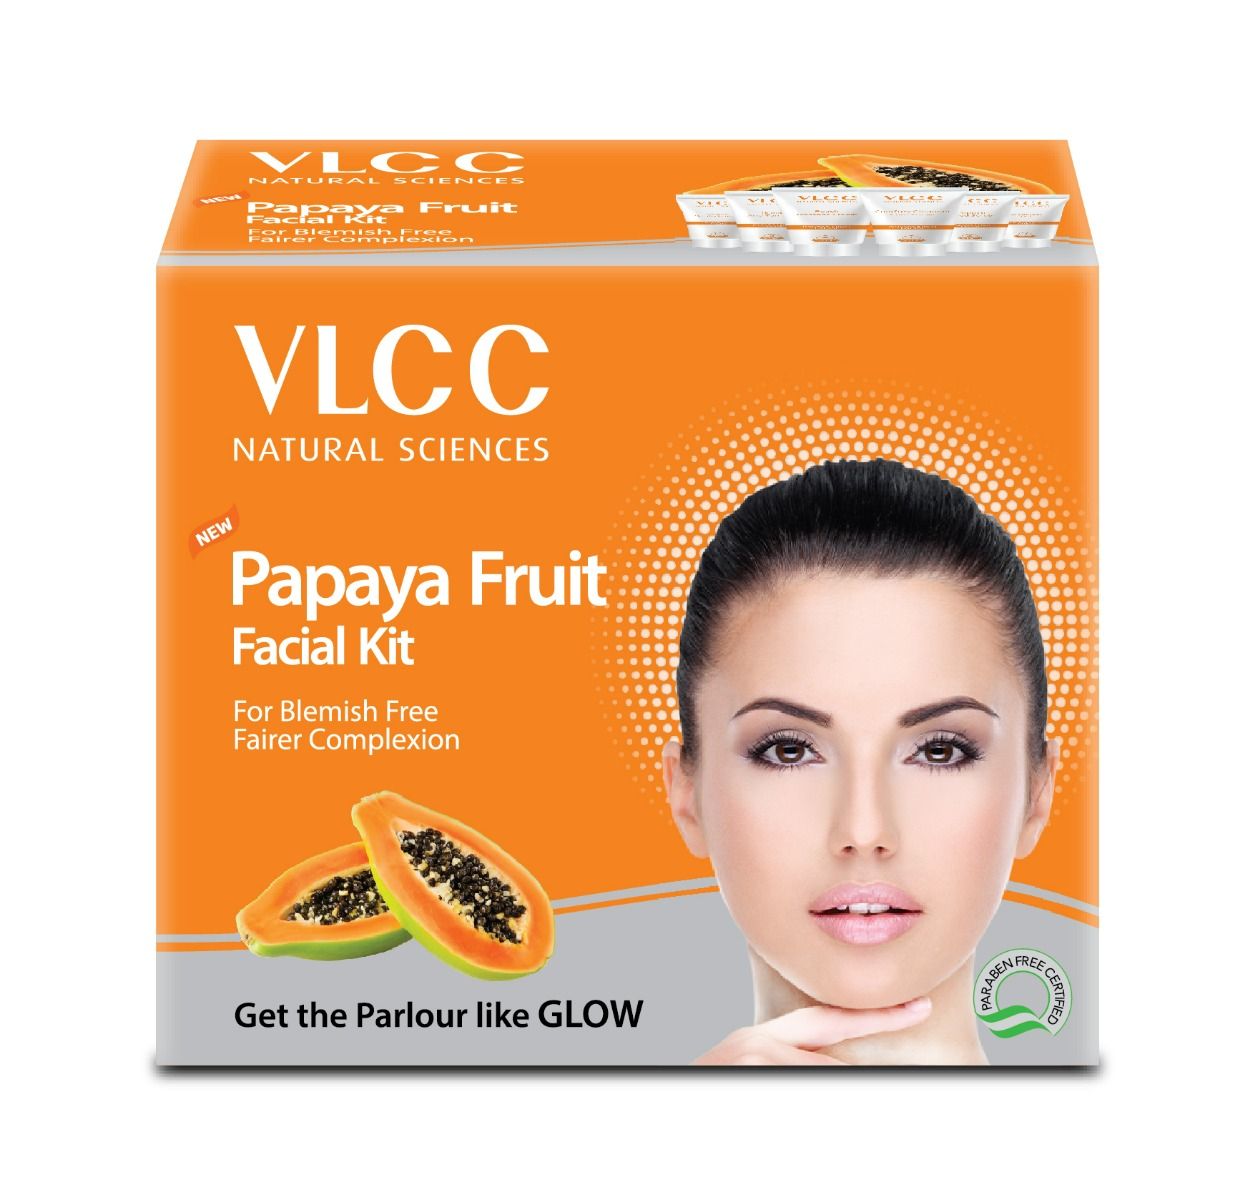 VLCC New Papaya Fruit Facial Kit, 1 Count, Pack of 1 